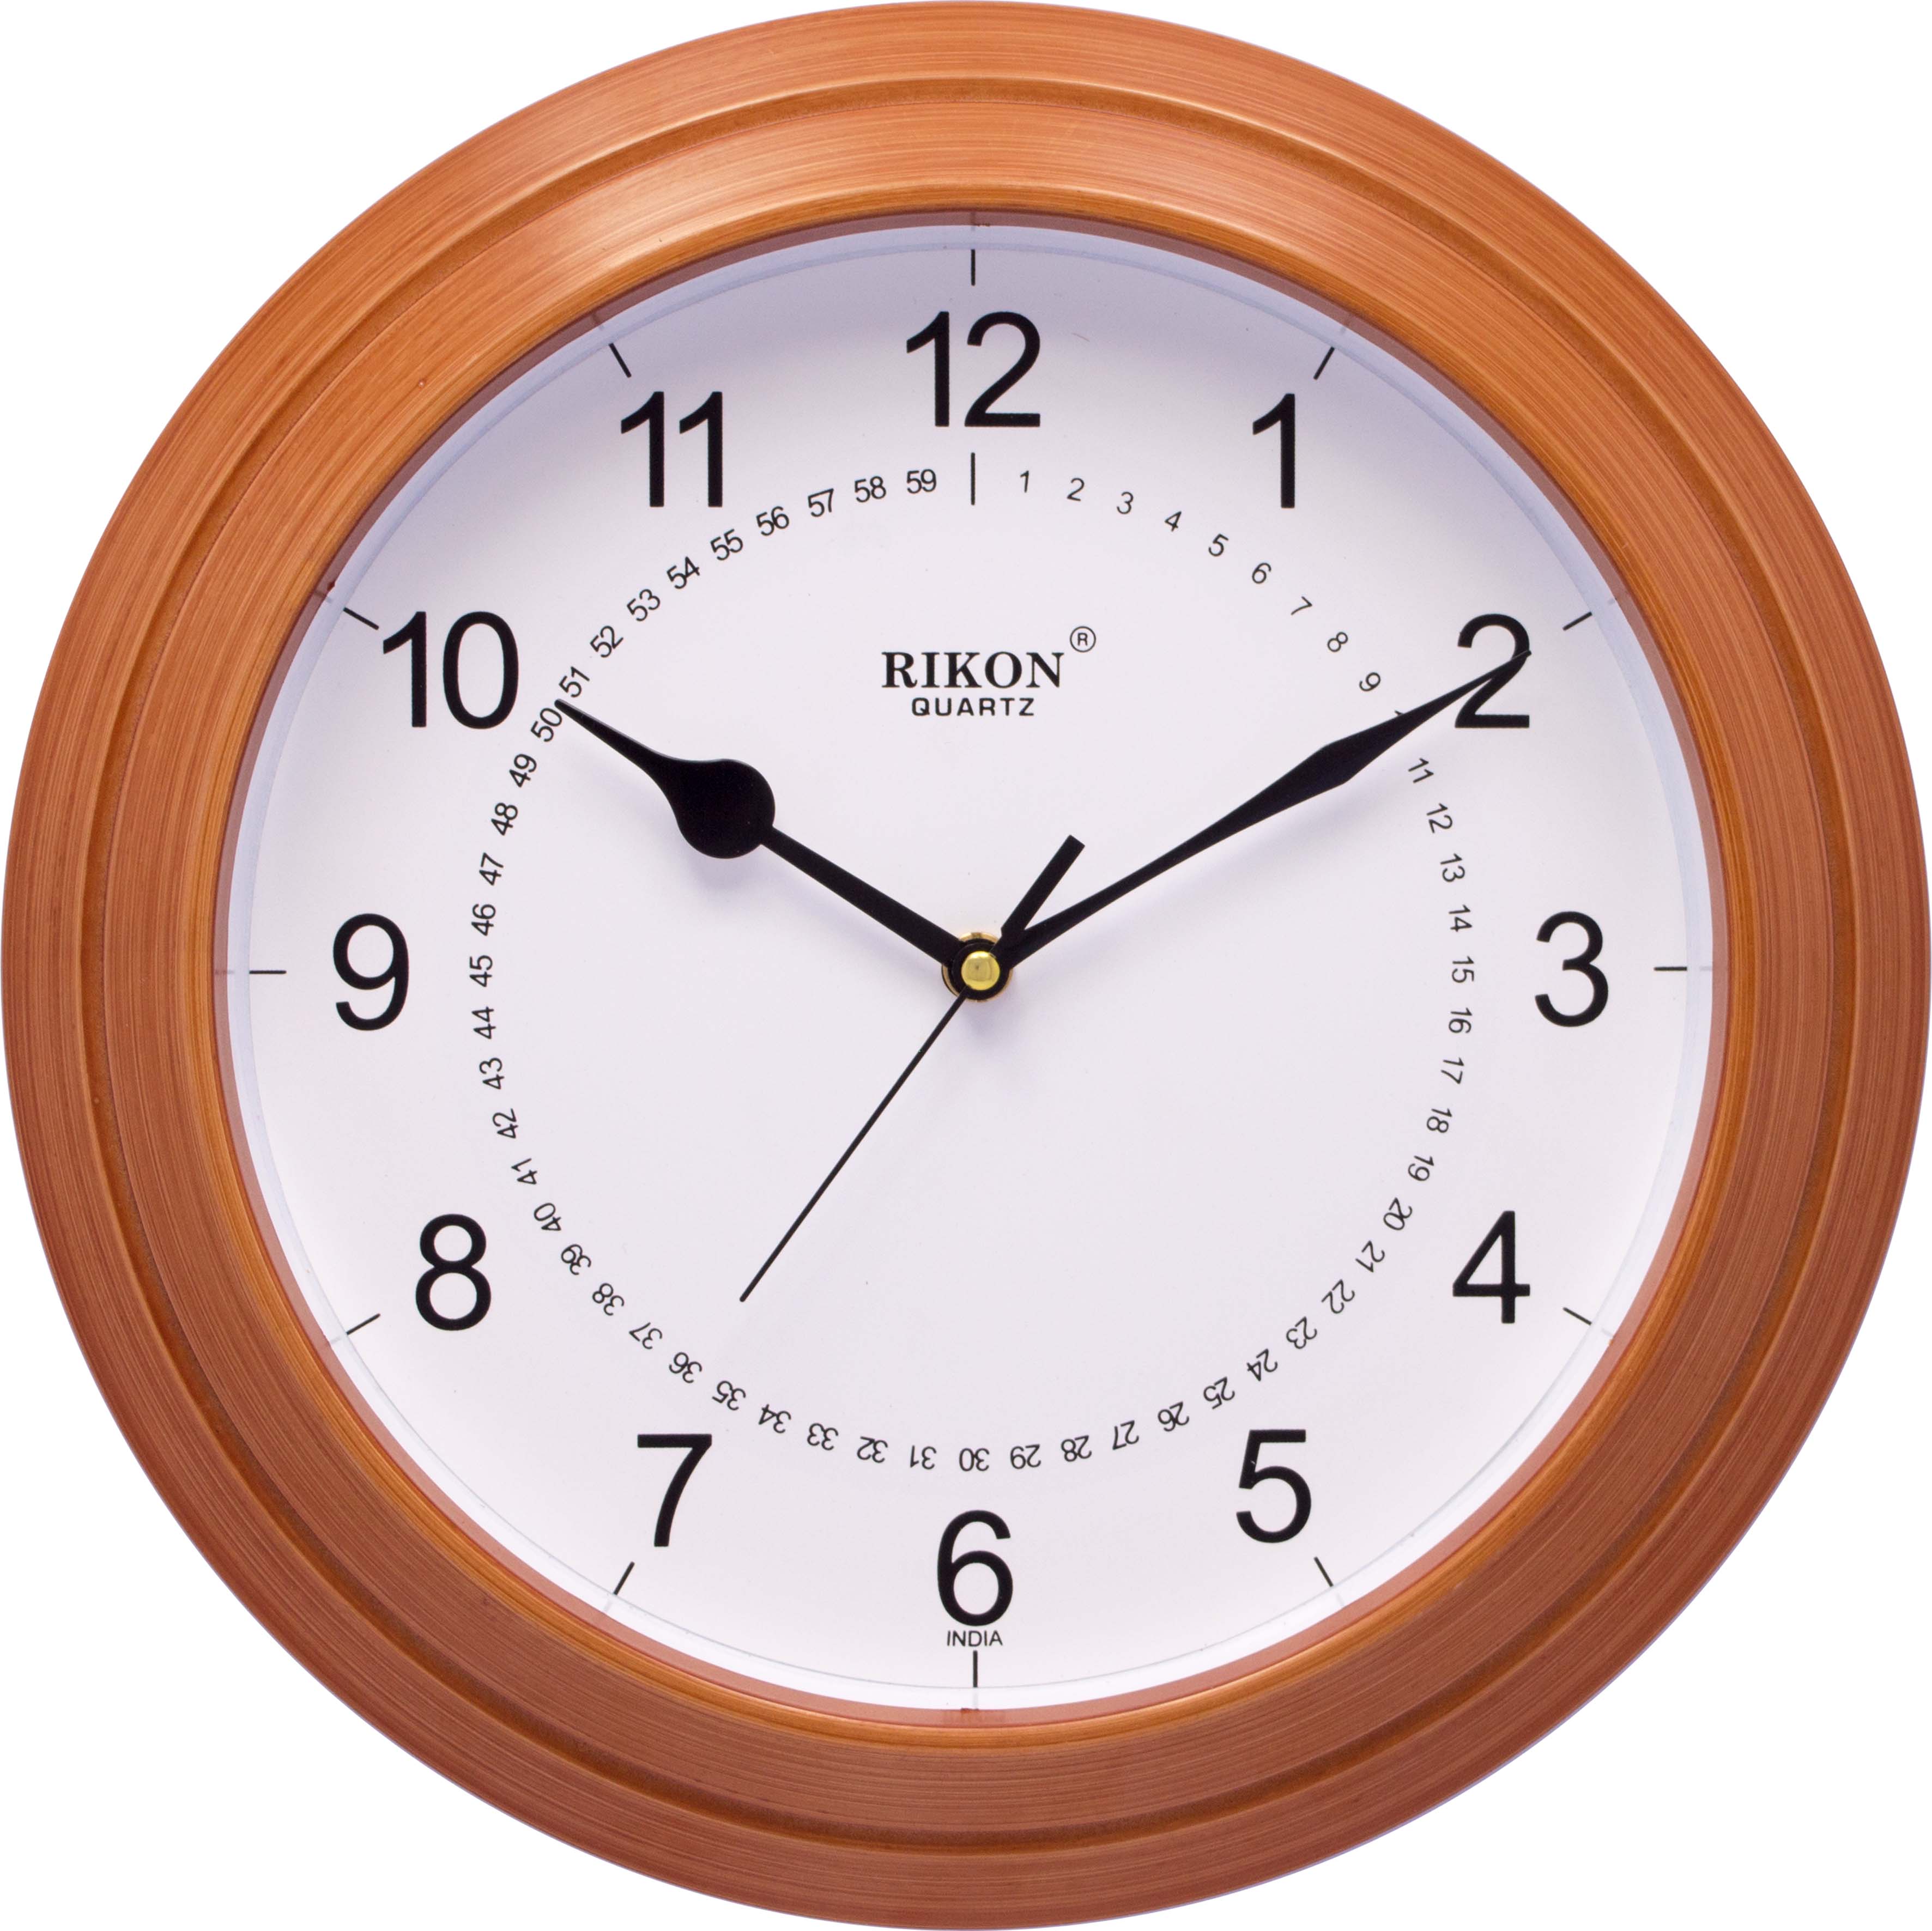 Genuine Rikon Brand Wall Clocks, Round Shape, Made in India